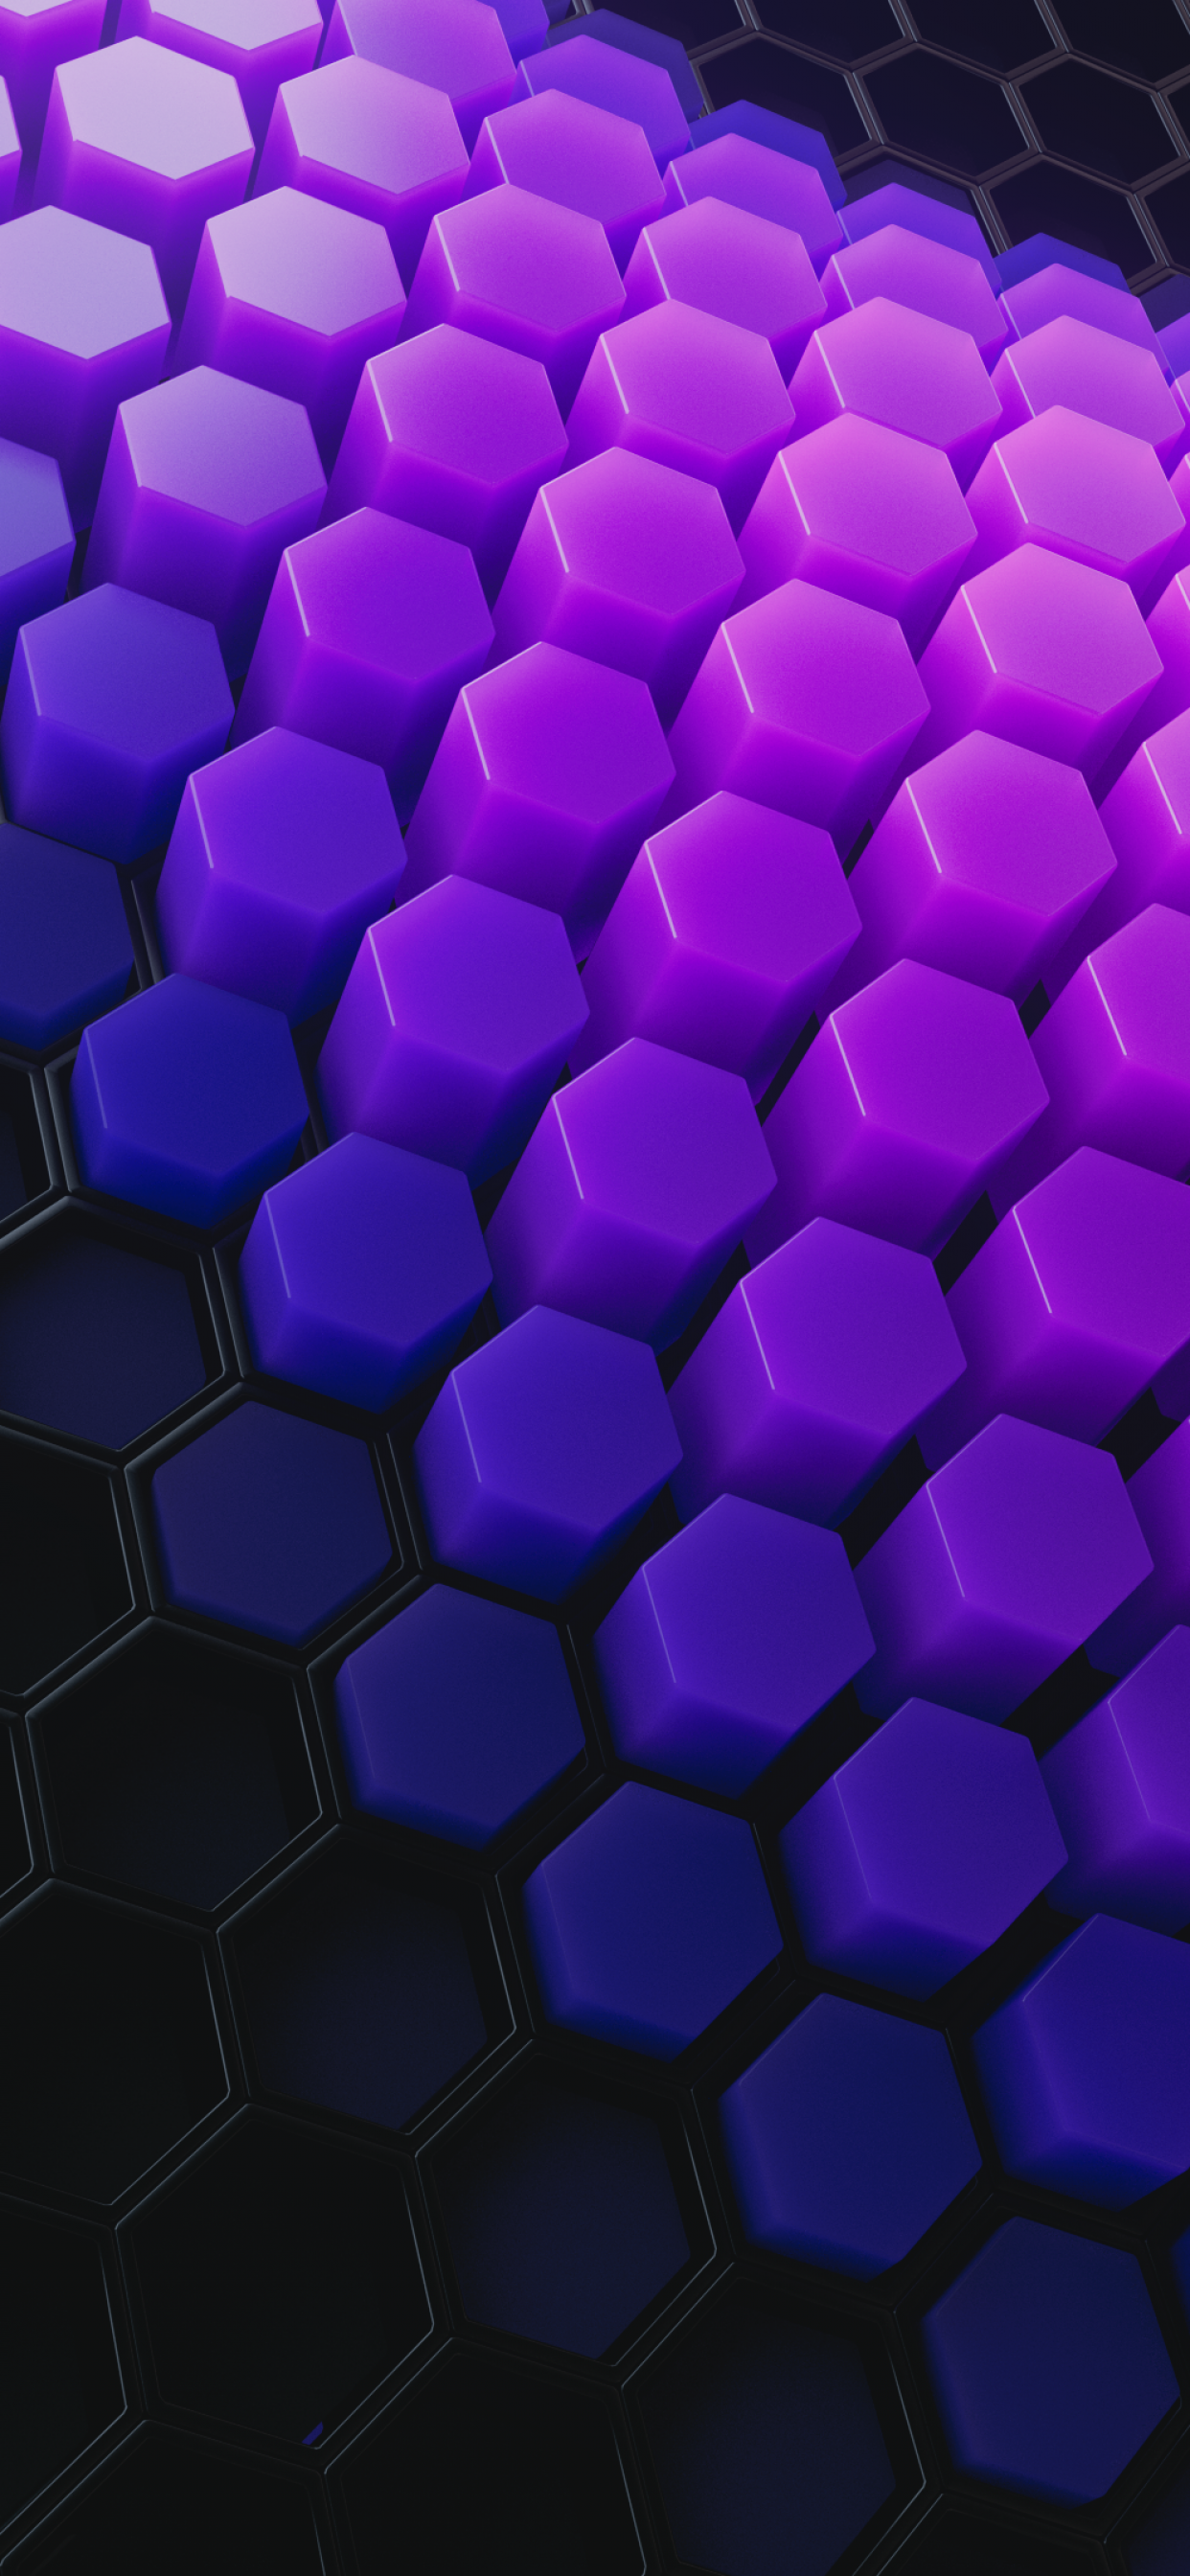 Hexagons Wallpaper 4K, Patterns, Violet background, Violet blocks, Abstract